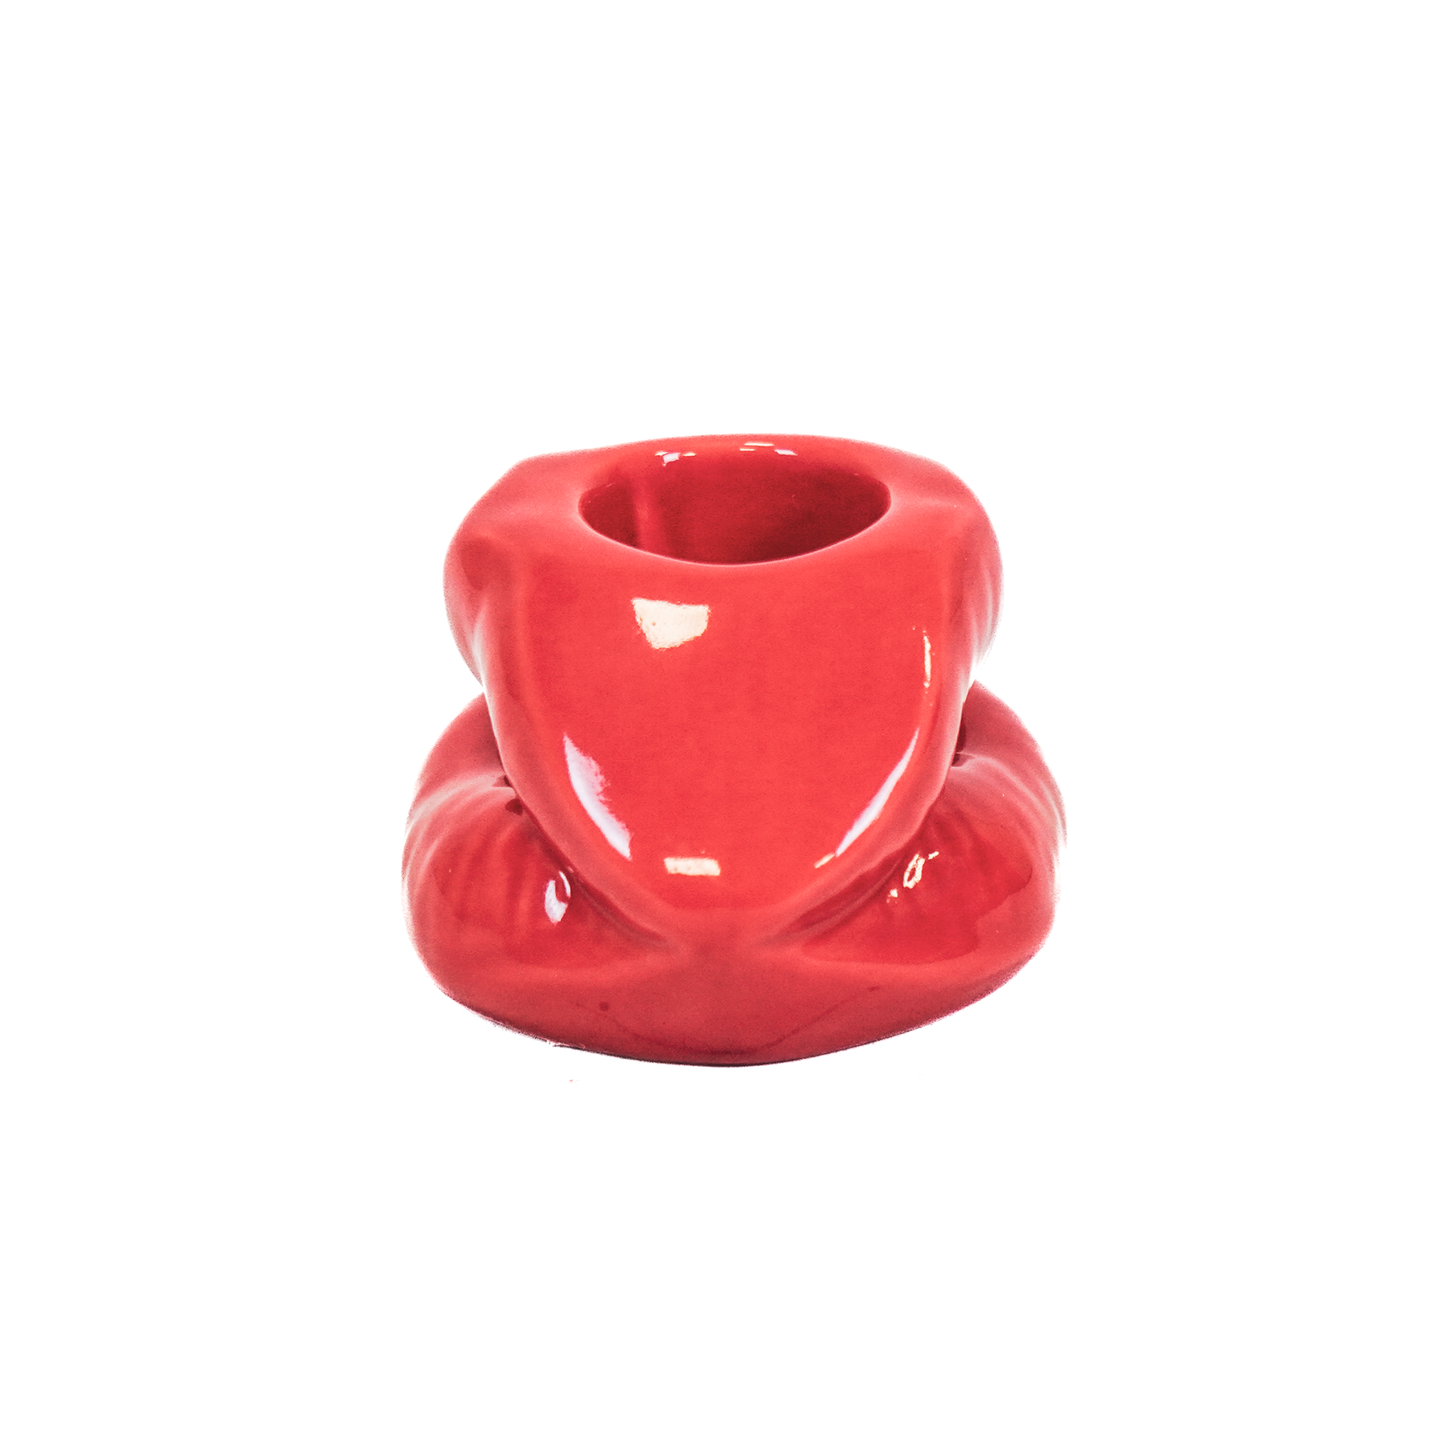 Candle holder - Lip - Ceramic - Red - 7x5,5x4cm